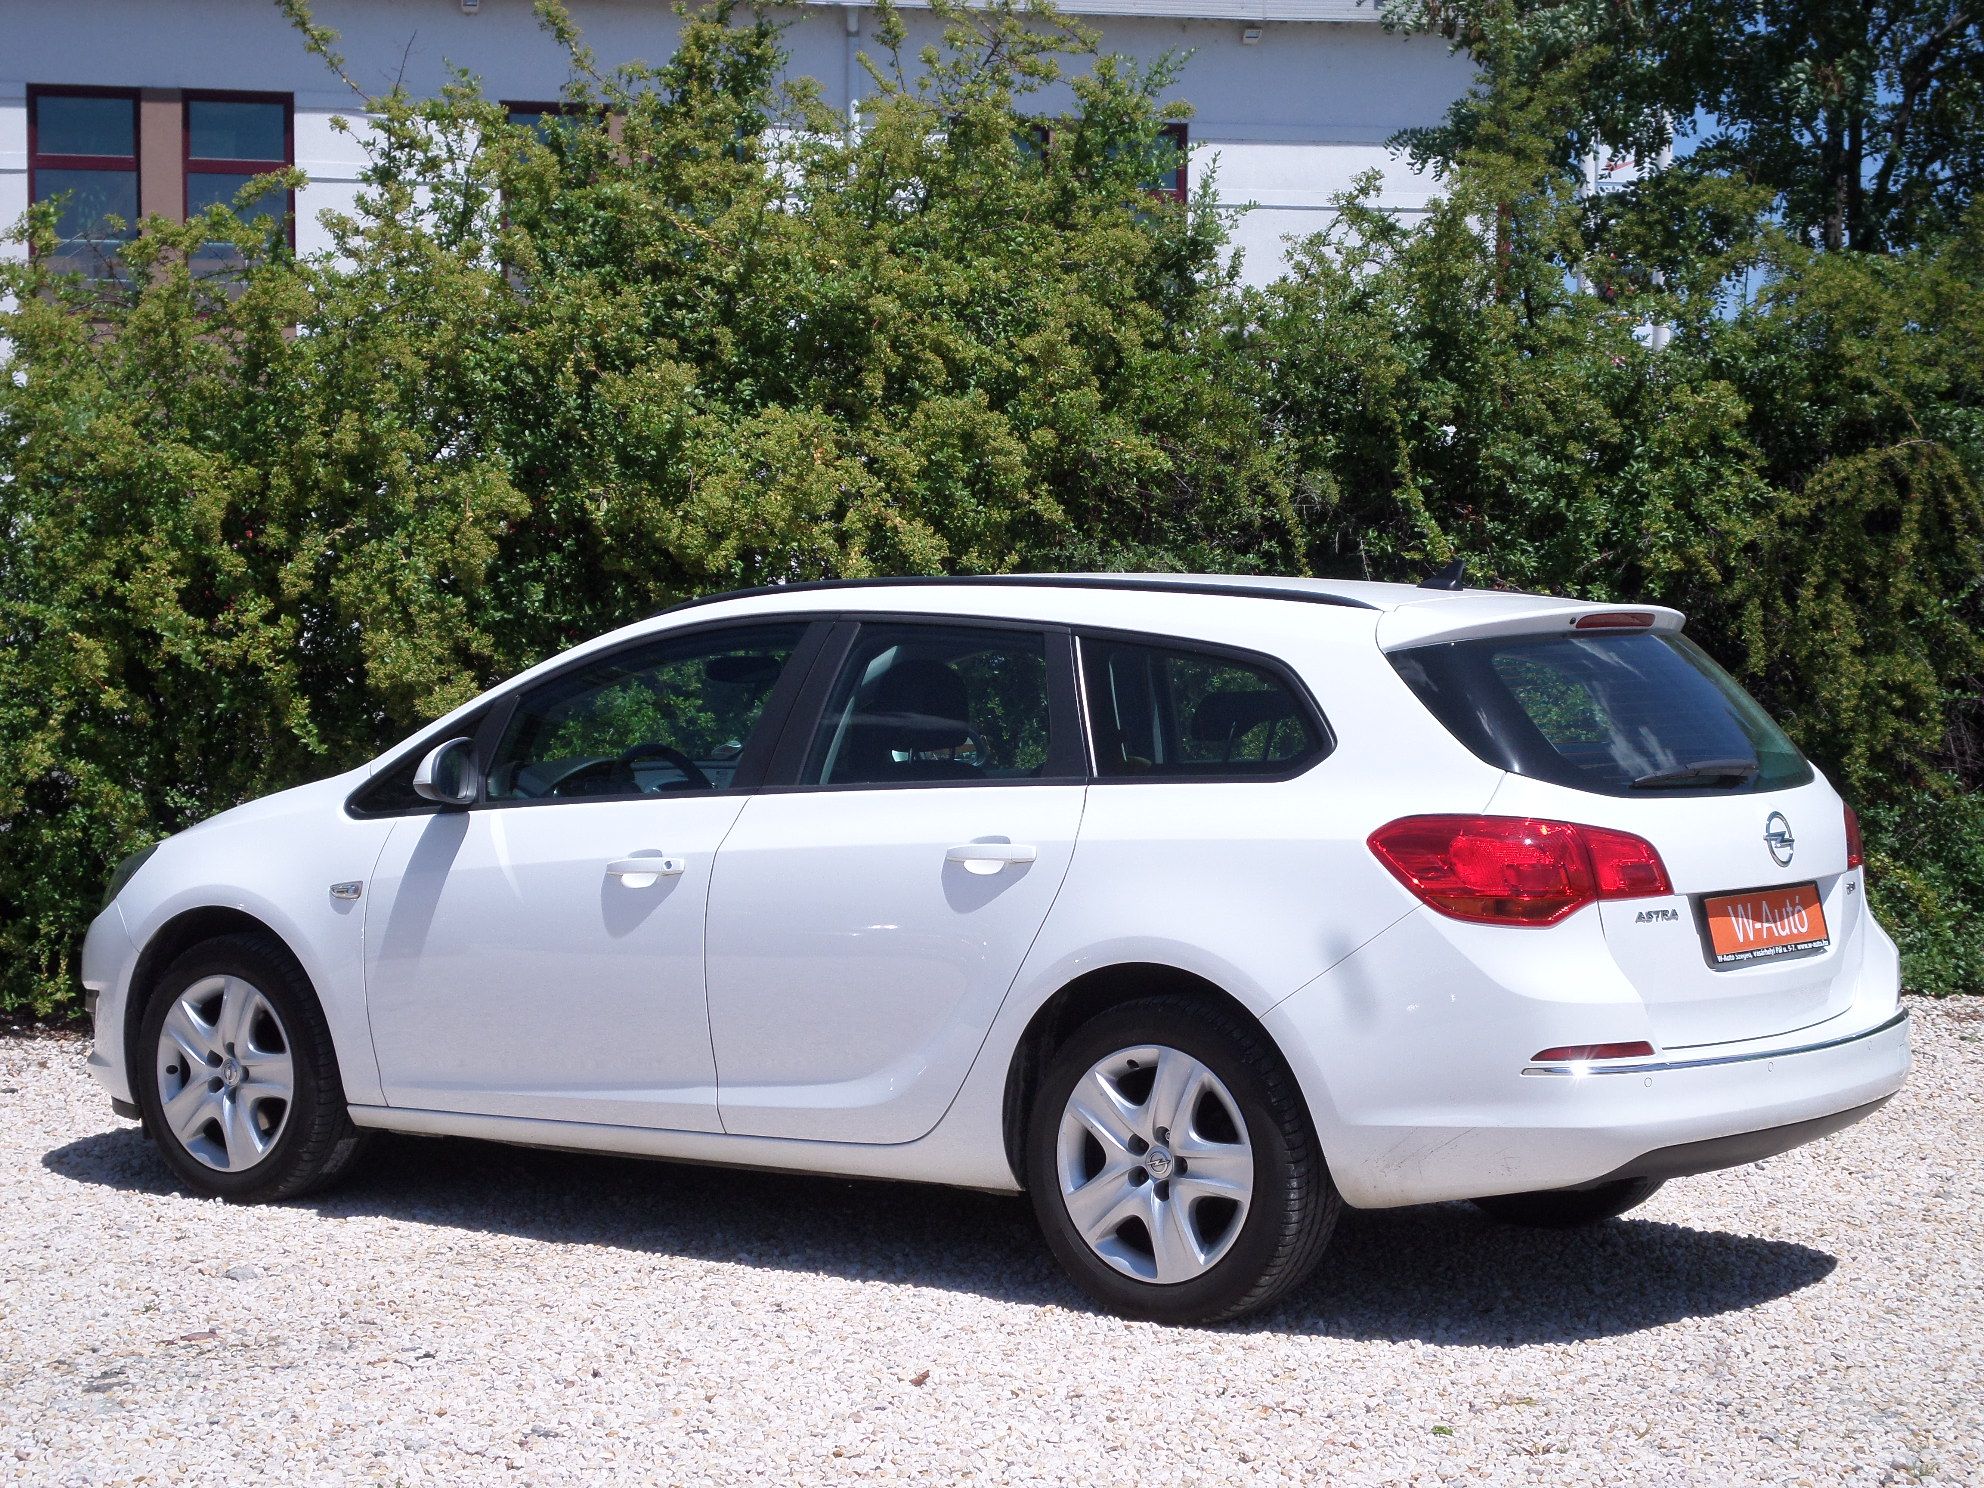 Опель универсал 2011. Opel Astra универсал 2011. Opel Astra j 2011 универсал. Opel Astra h универсал 2011.